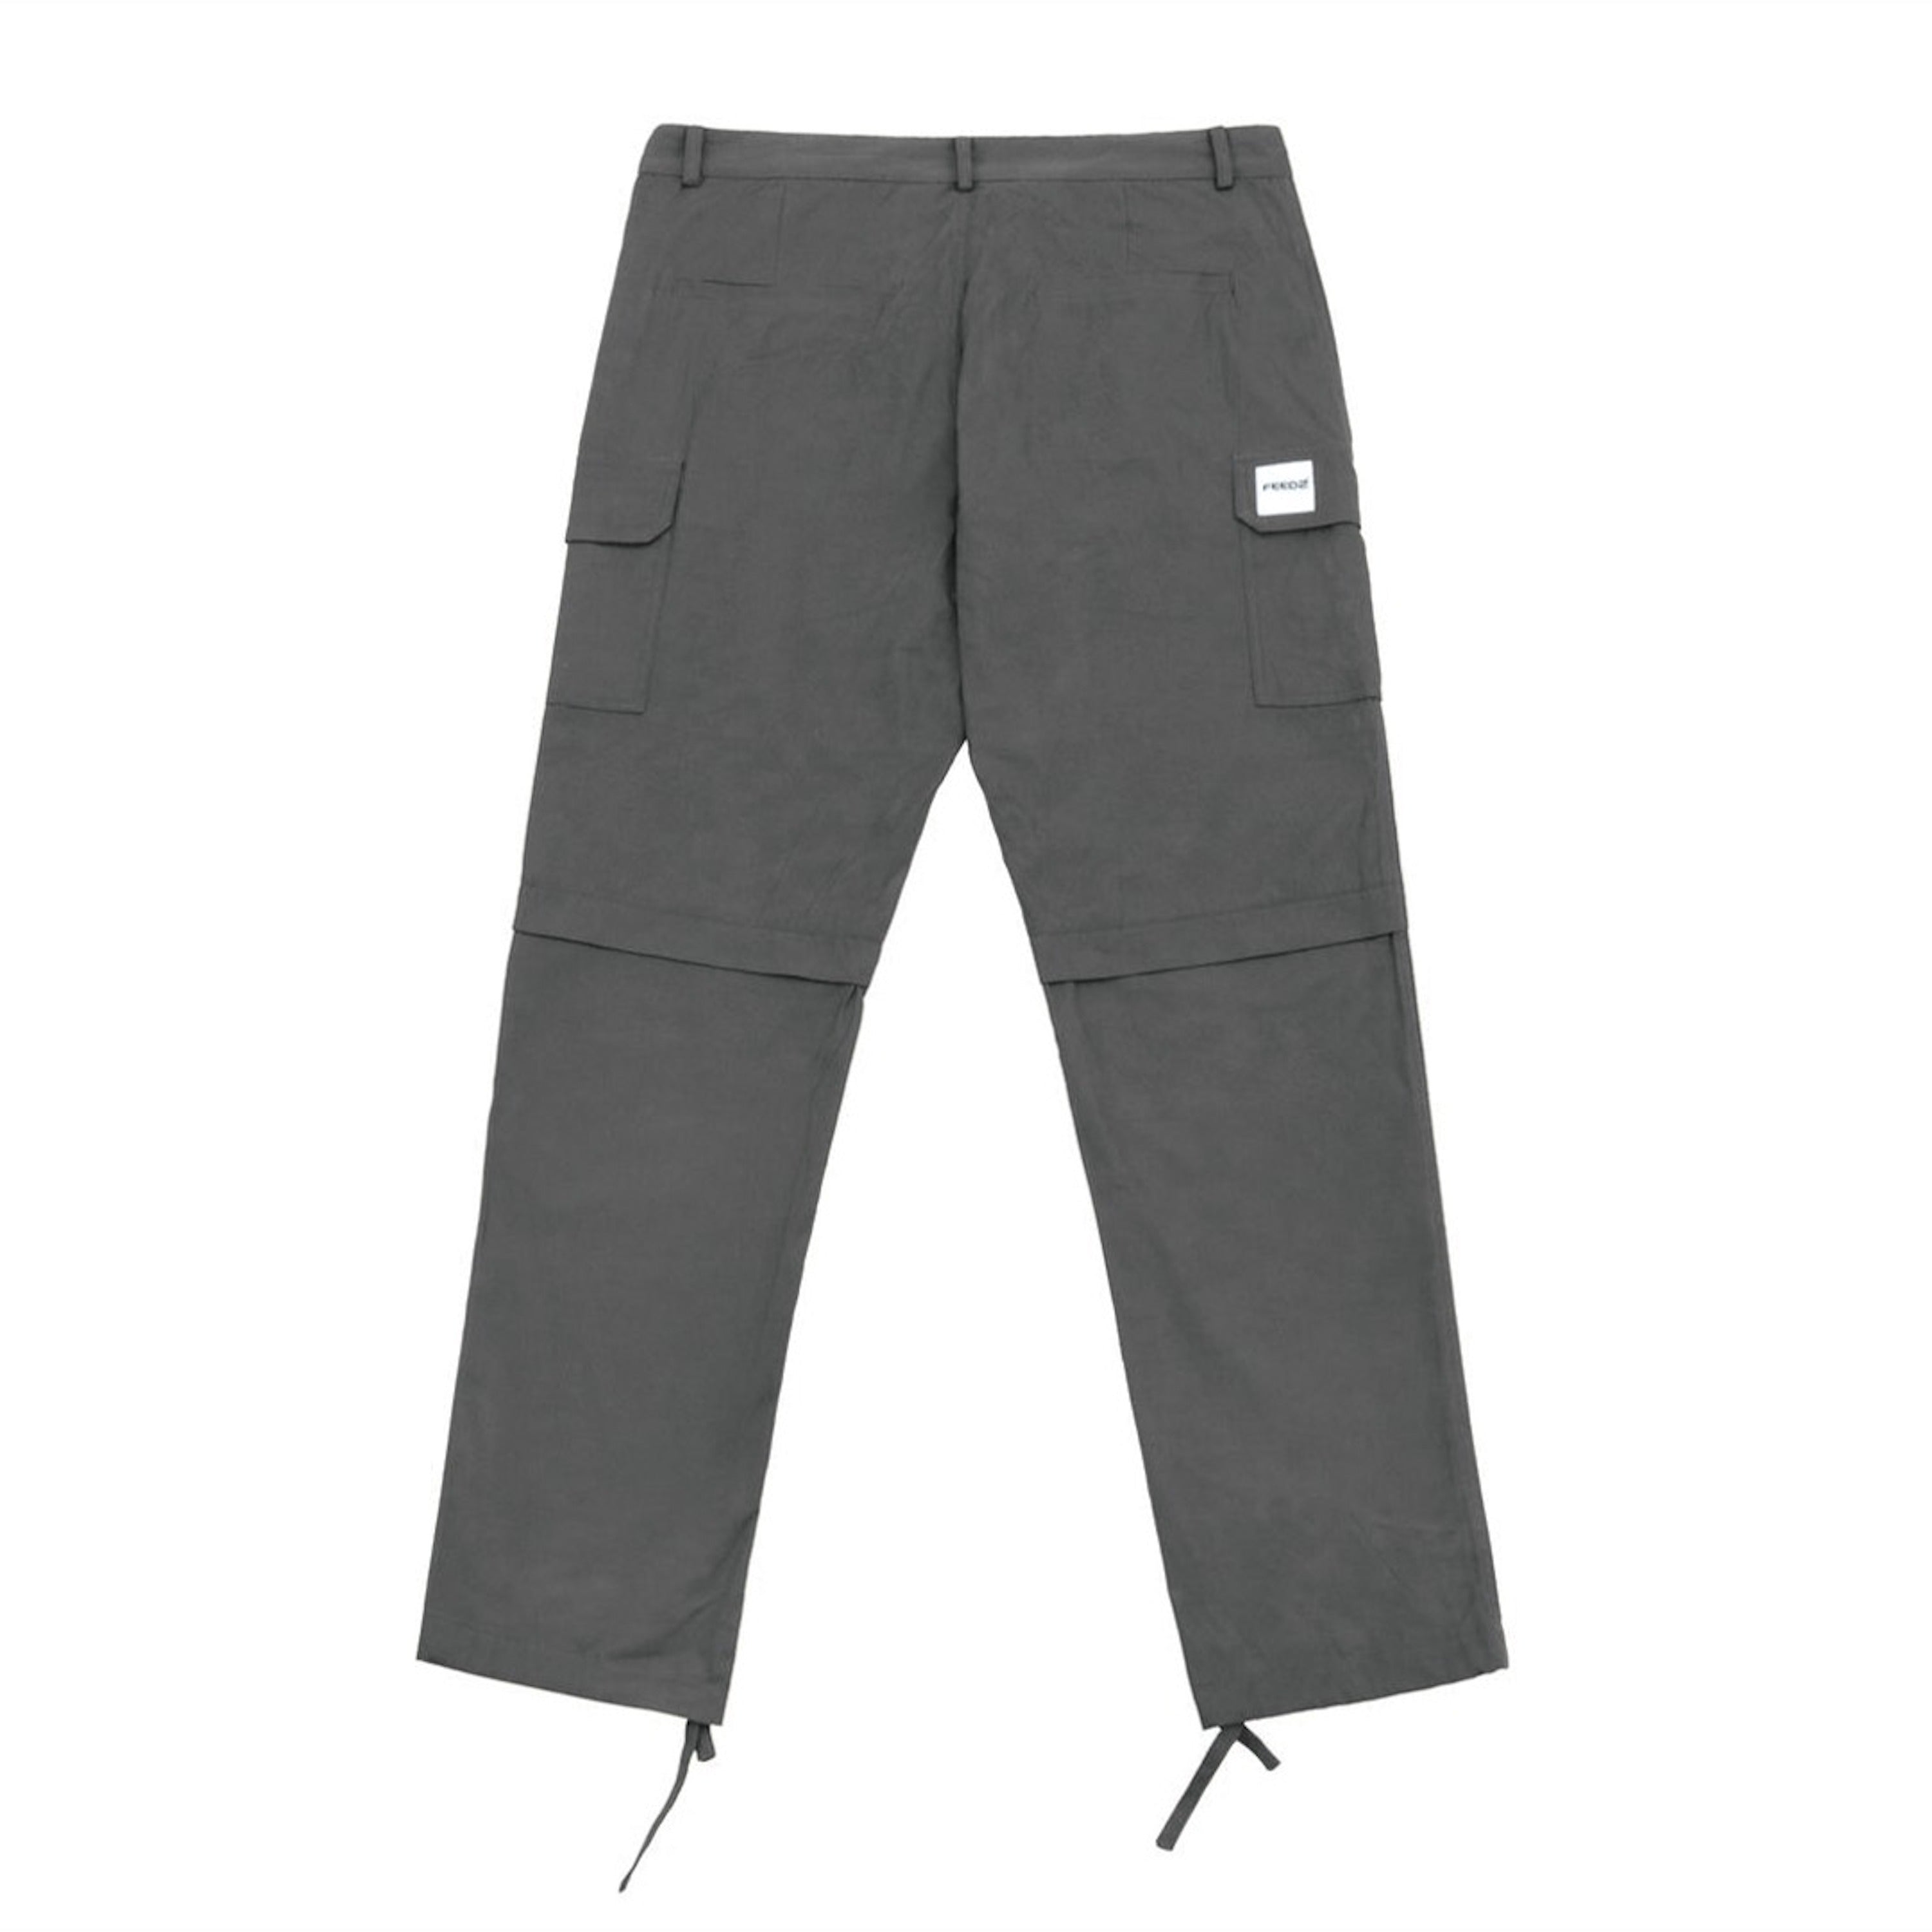 Feedz Cargo Pants - Dark grey